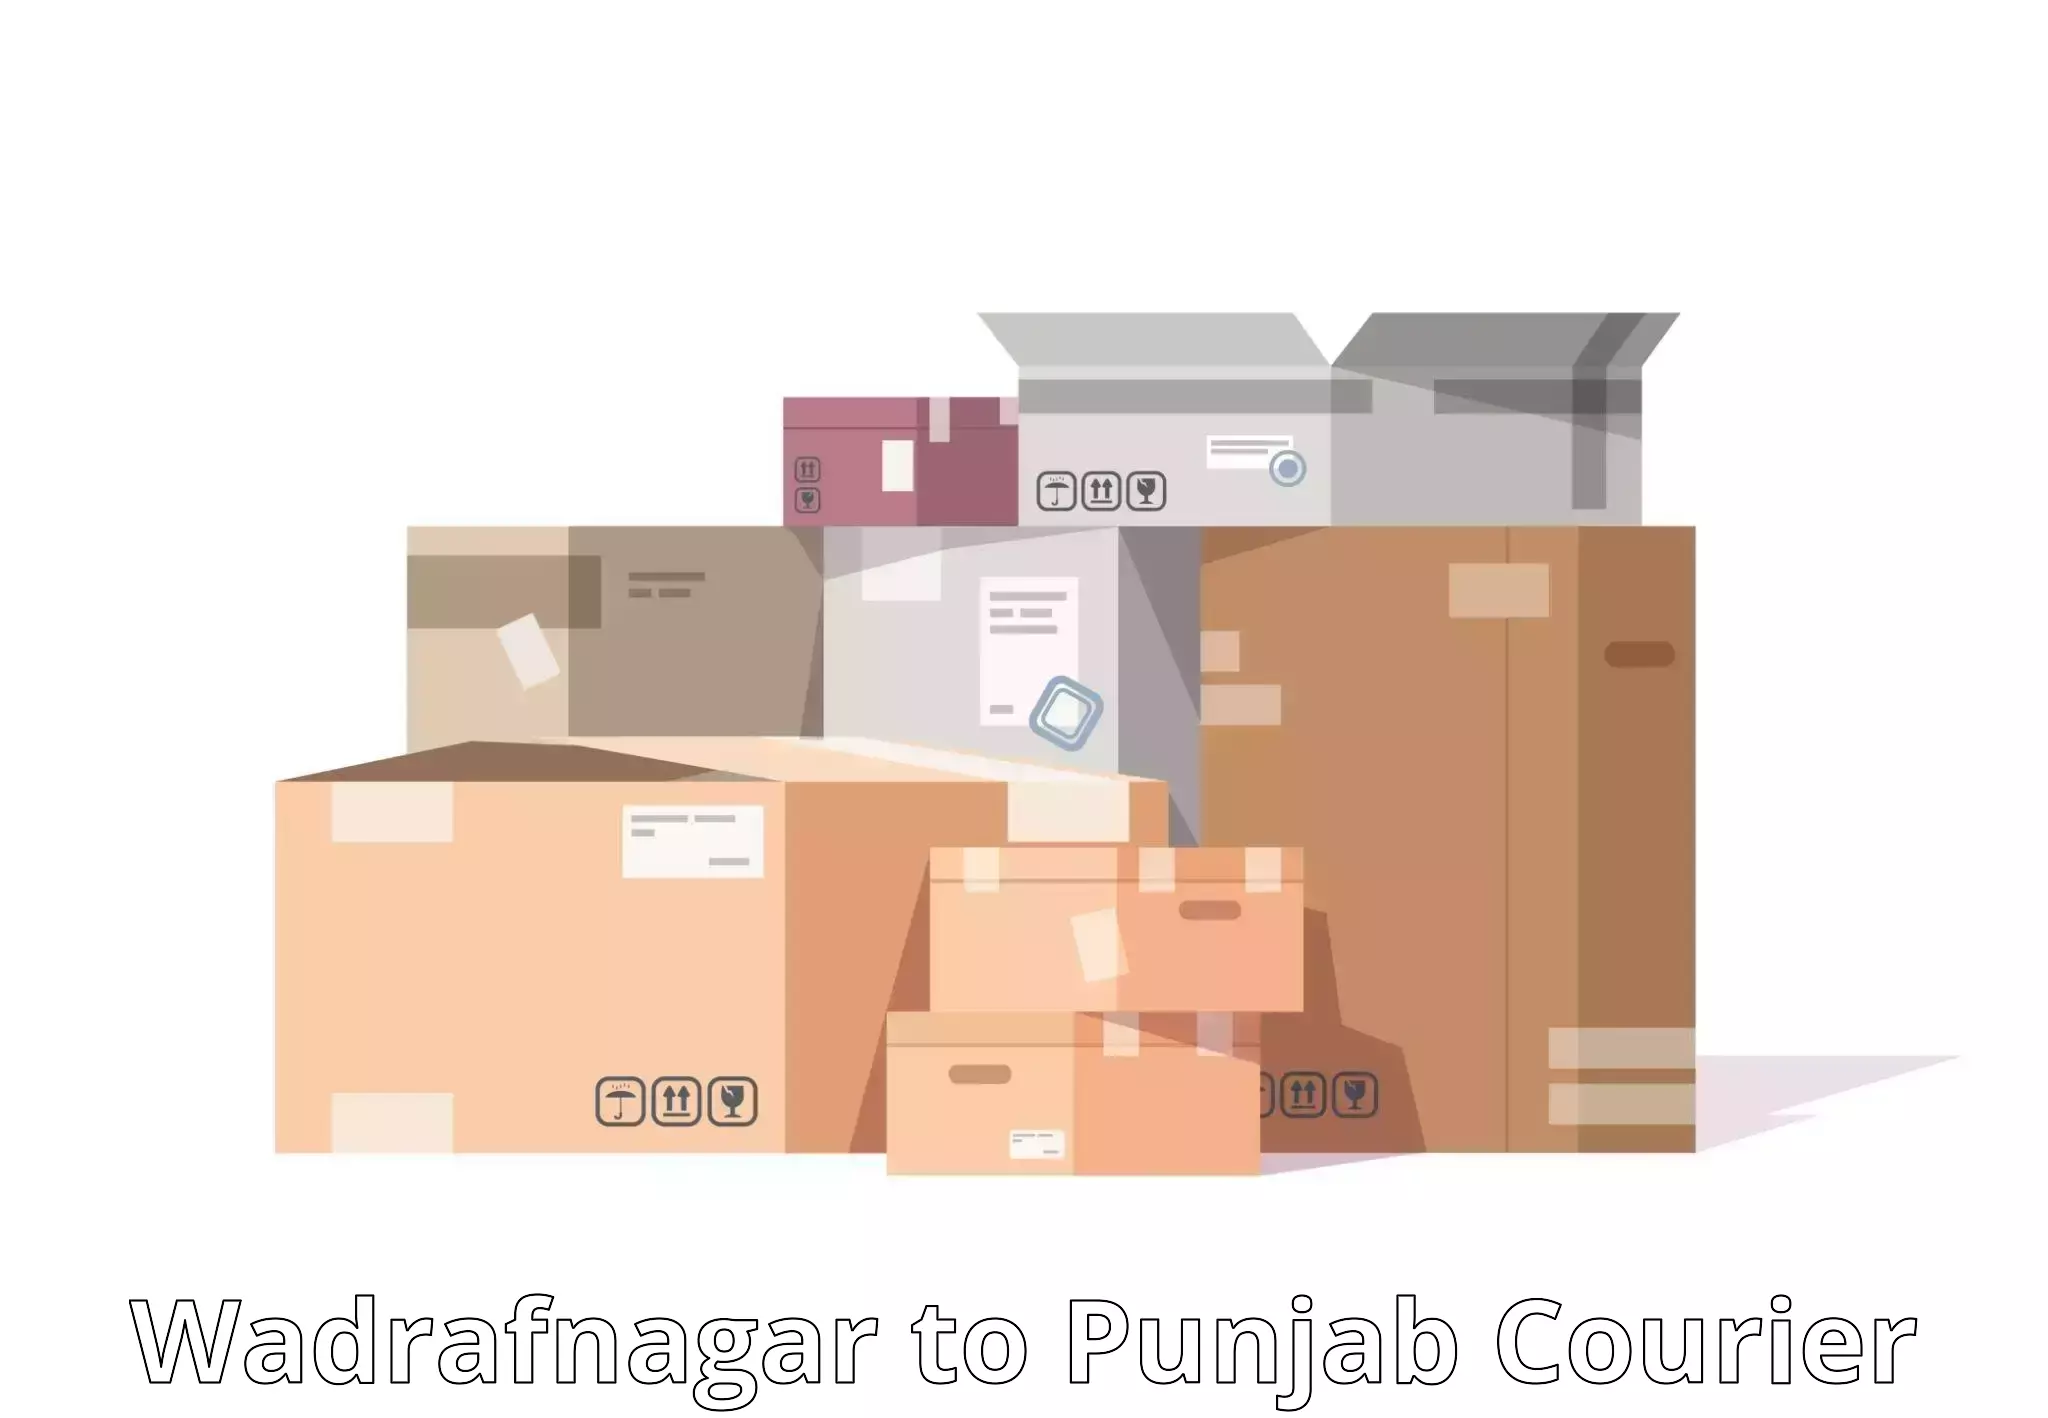 E-commerce logistics support Wadrafnagar to Amritsar